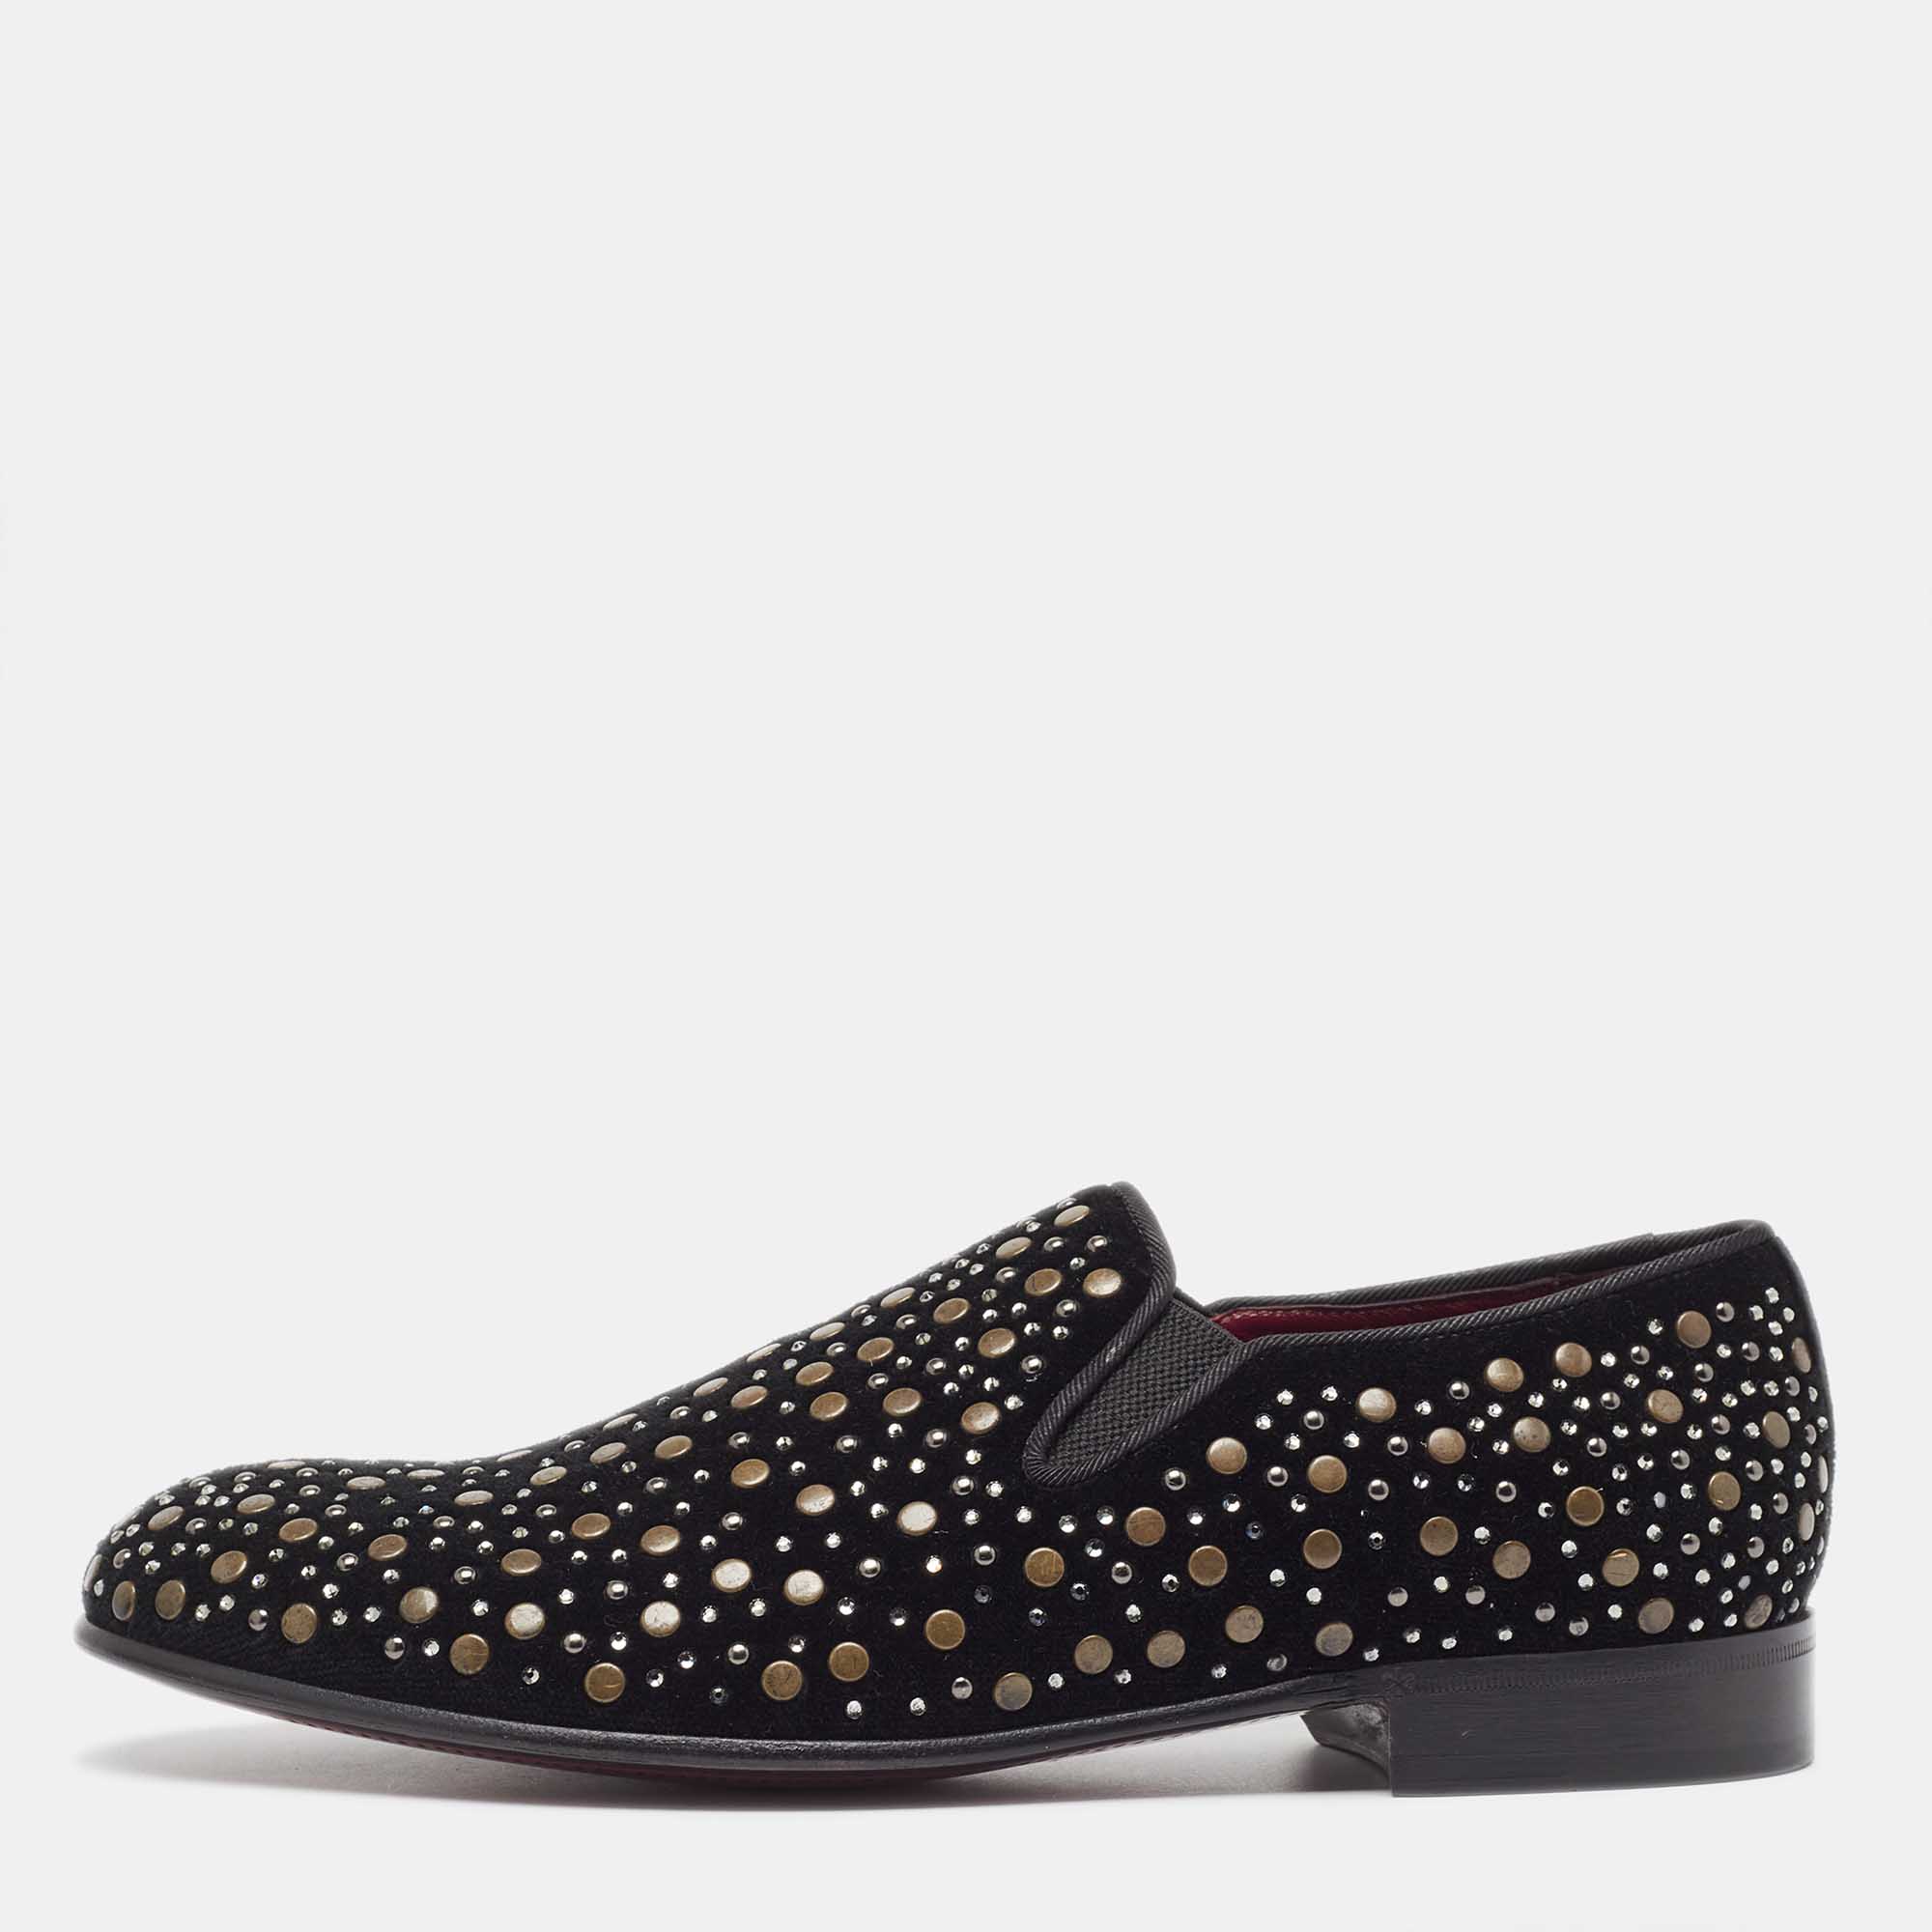 Pre-owned Dolce & Gabbana Black Velvet Crystal Studded Loafers Size 41